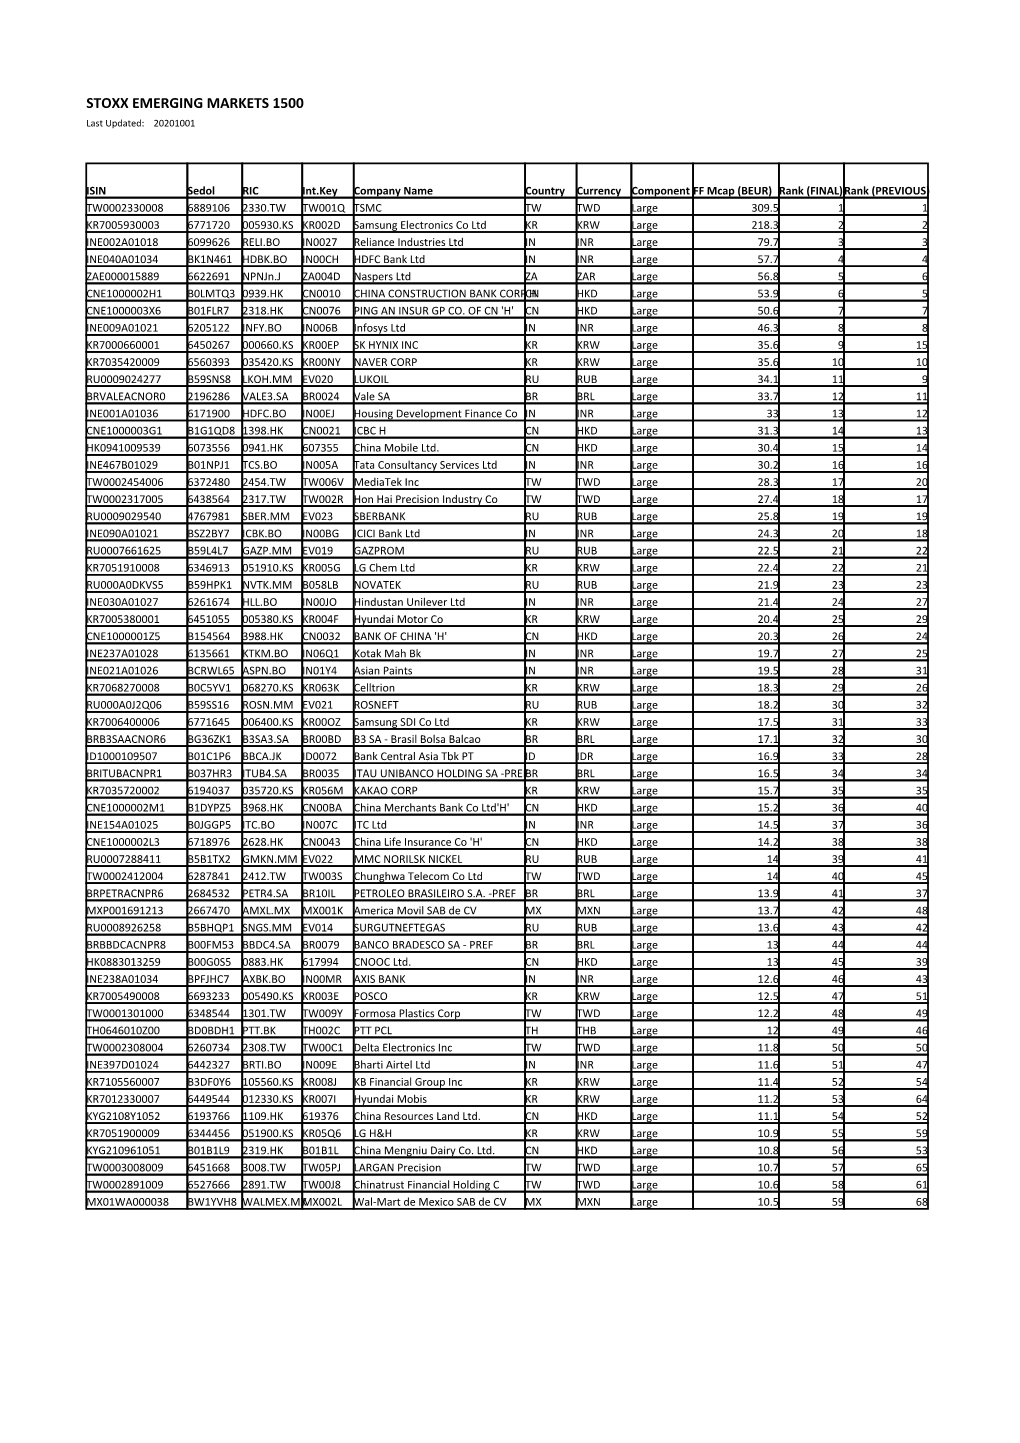 STOXX EMERGING MARKETS 1500 Selection List